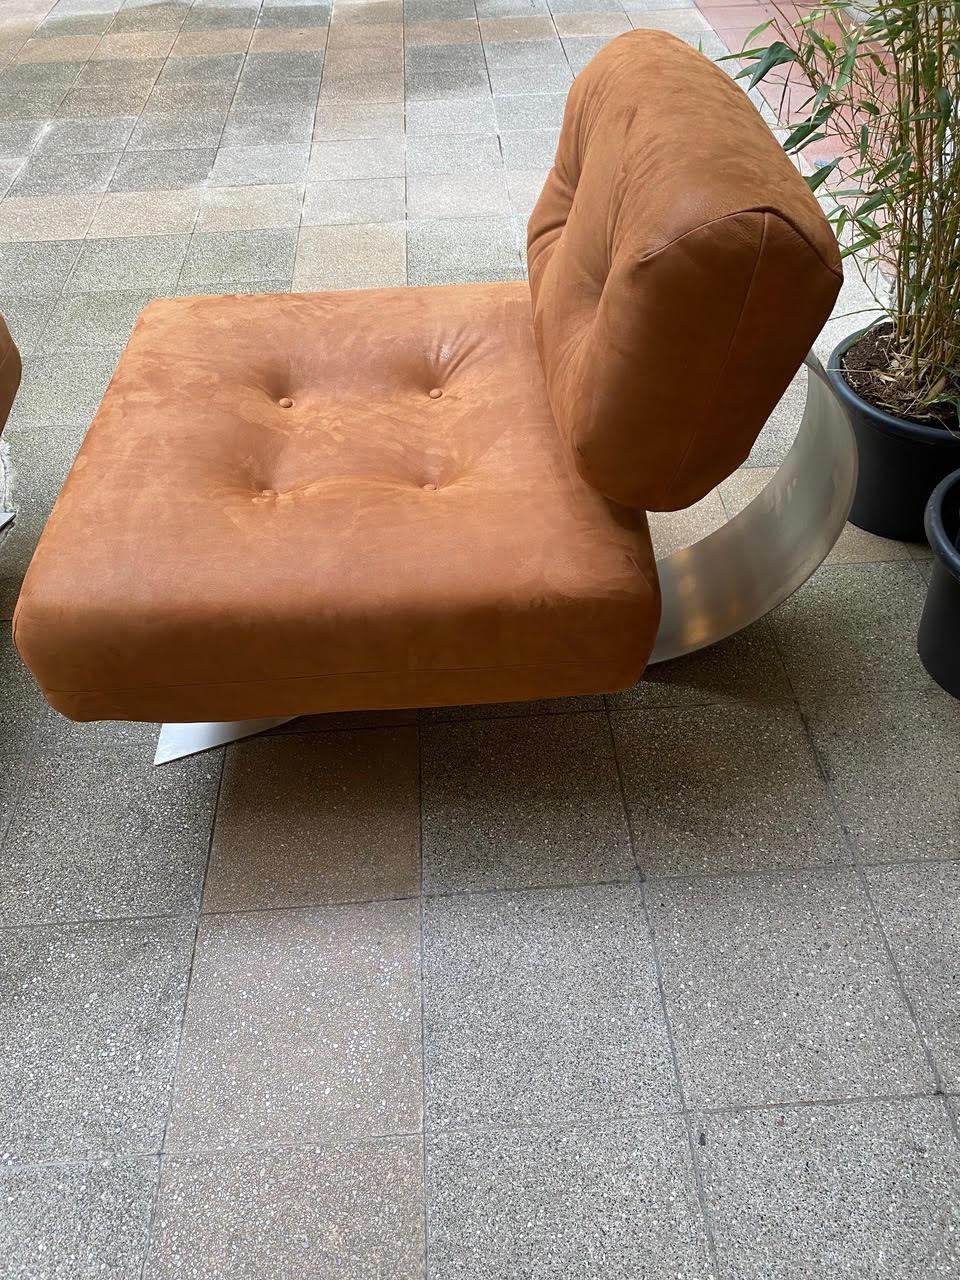 Oscar Niemeyer (1907-2012)

Single armchair model “Alta”
Manufactured by Mobilier international
France, 1974
Steel, wool upholstery

Measurements
104,1 x 68,6x 56,5h cm
41 x 27 x 22,25h in

Literature
Gilles de Bure, Inte´rieurs: Le Mobilier